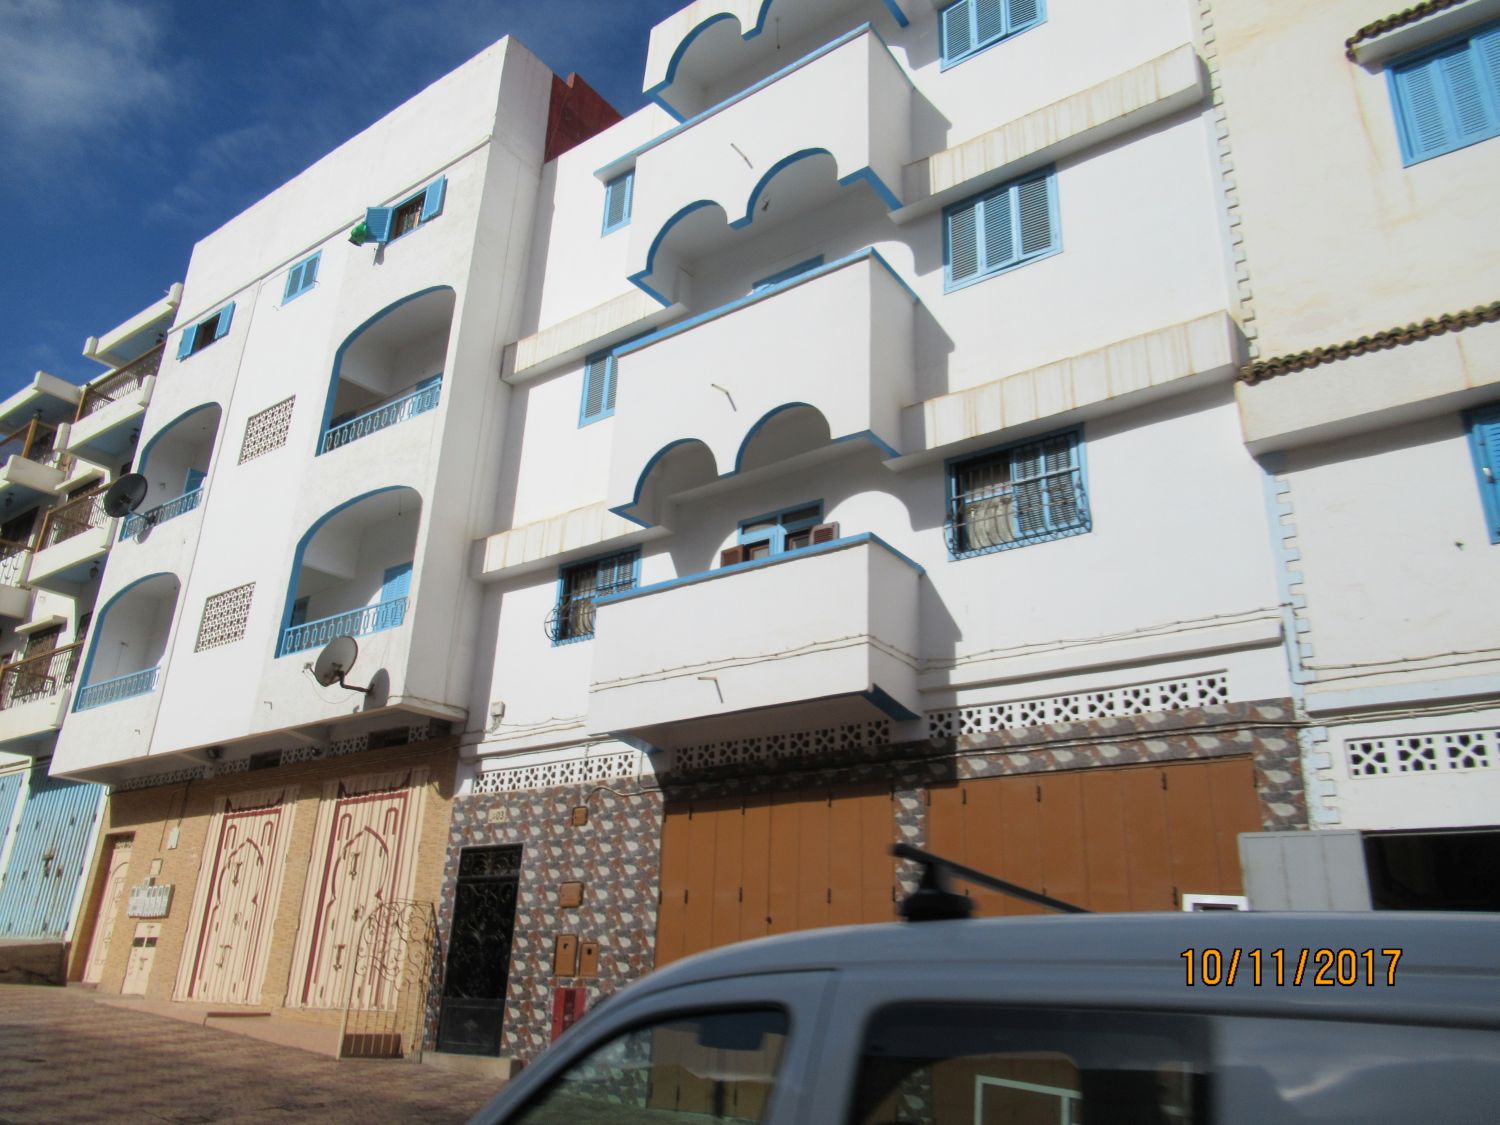 Typical apartment in Sidi Ifni City.